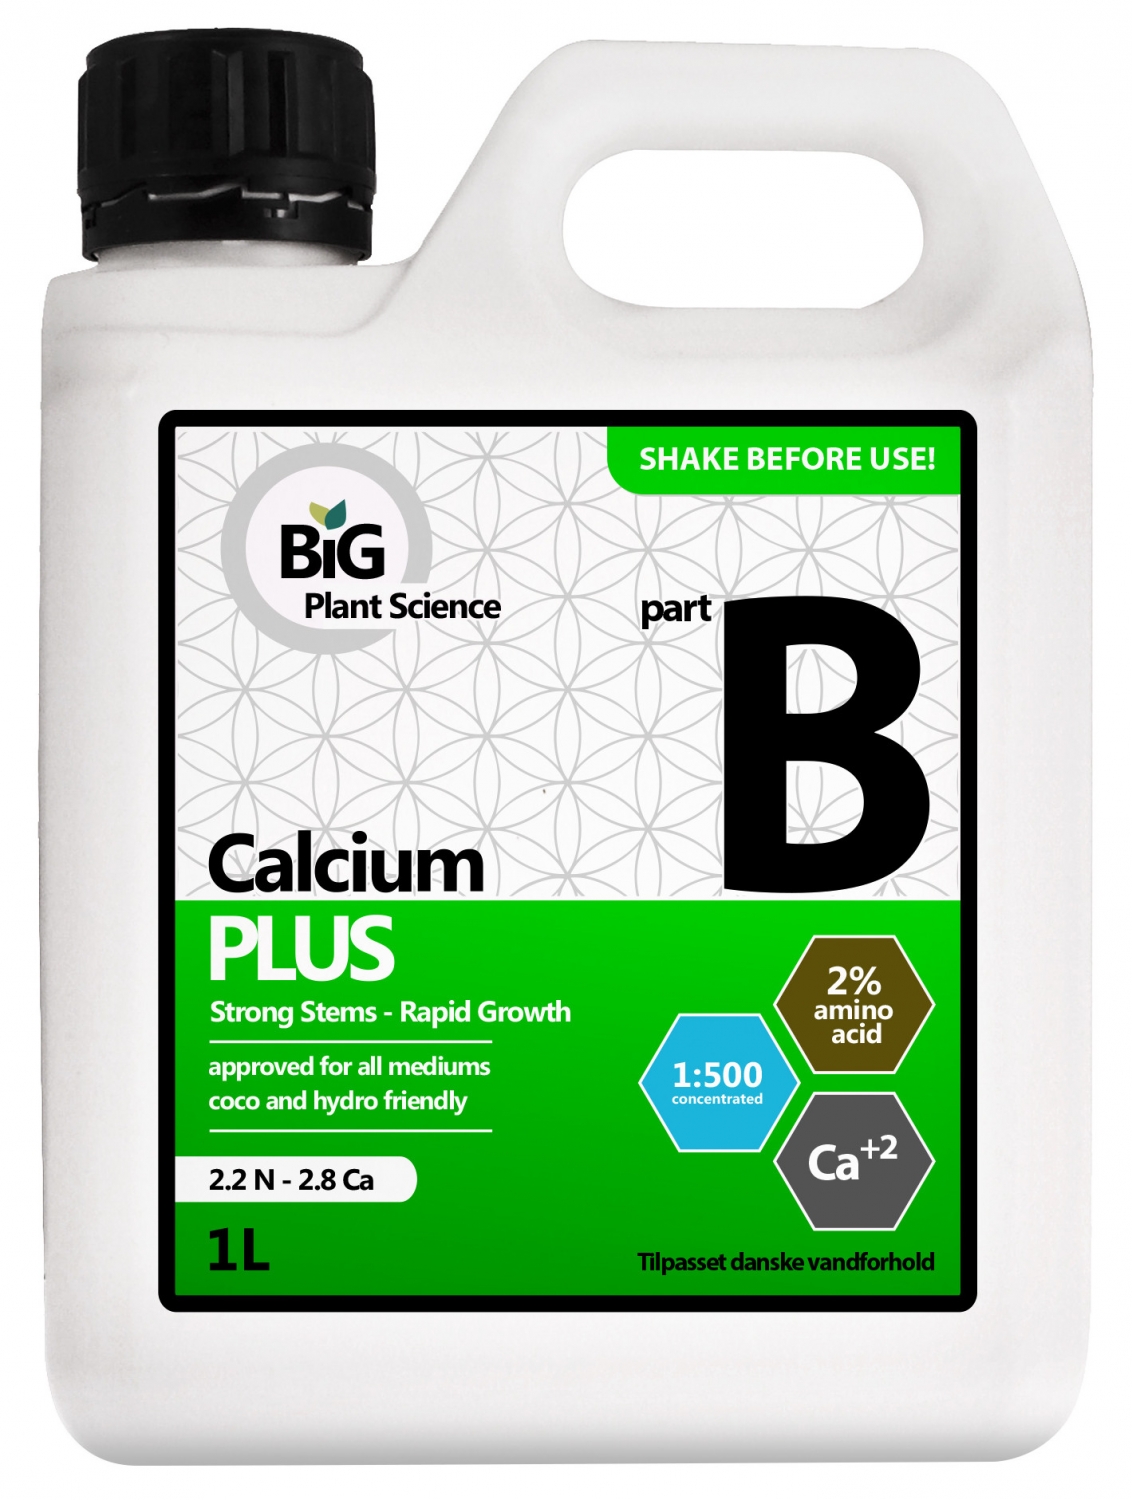 Calcium Plus Part B by Big Plant Science